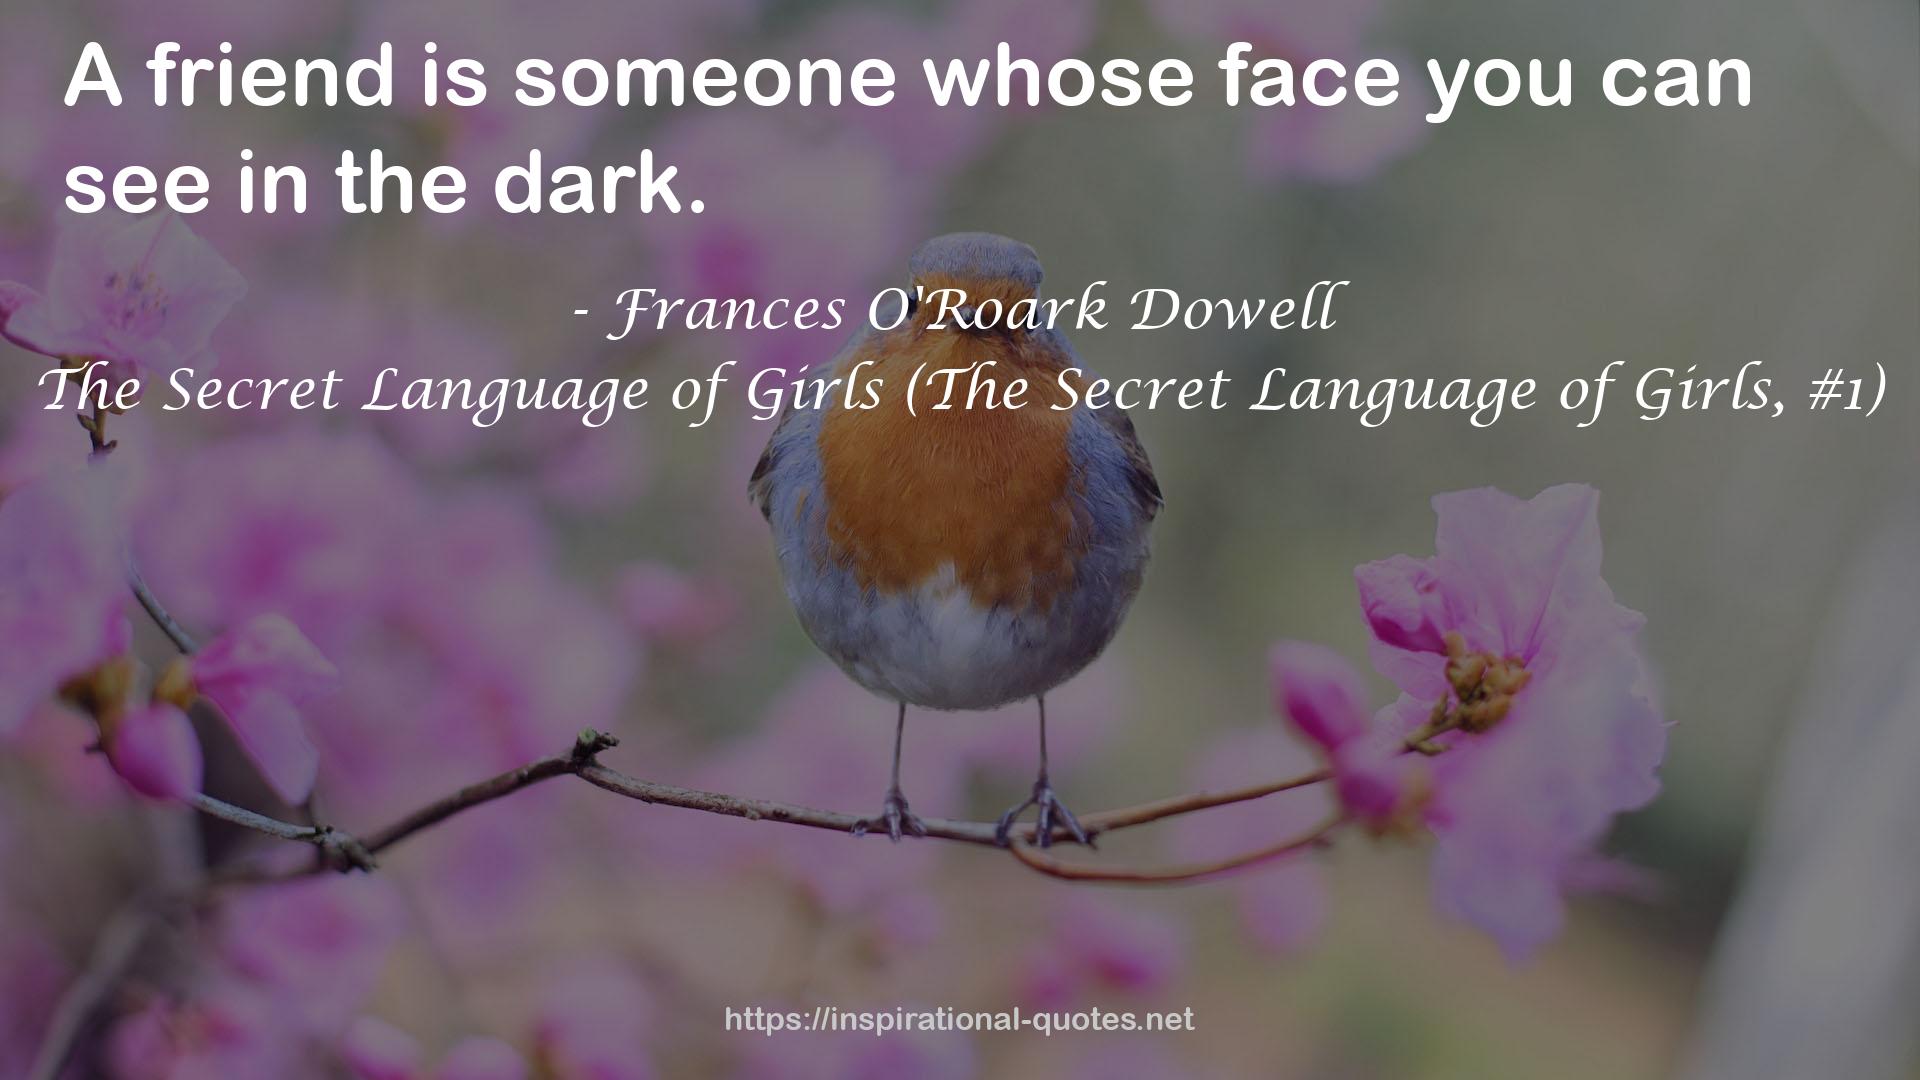 The Secret Language of Girls (The Secret Language of Girls, #1) QUOTES